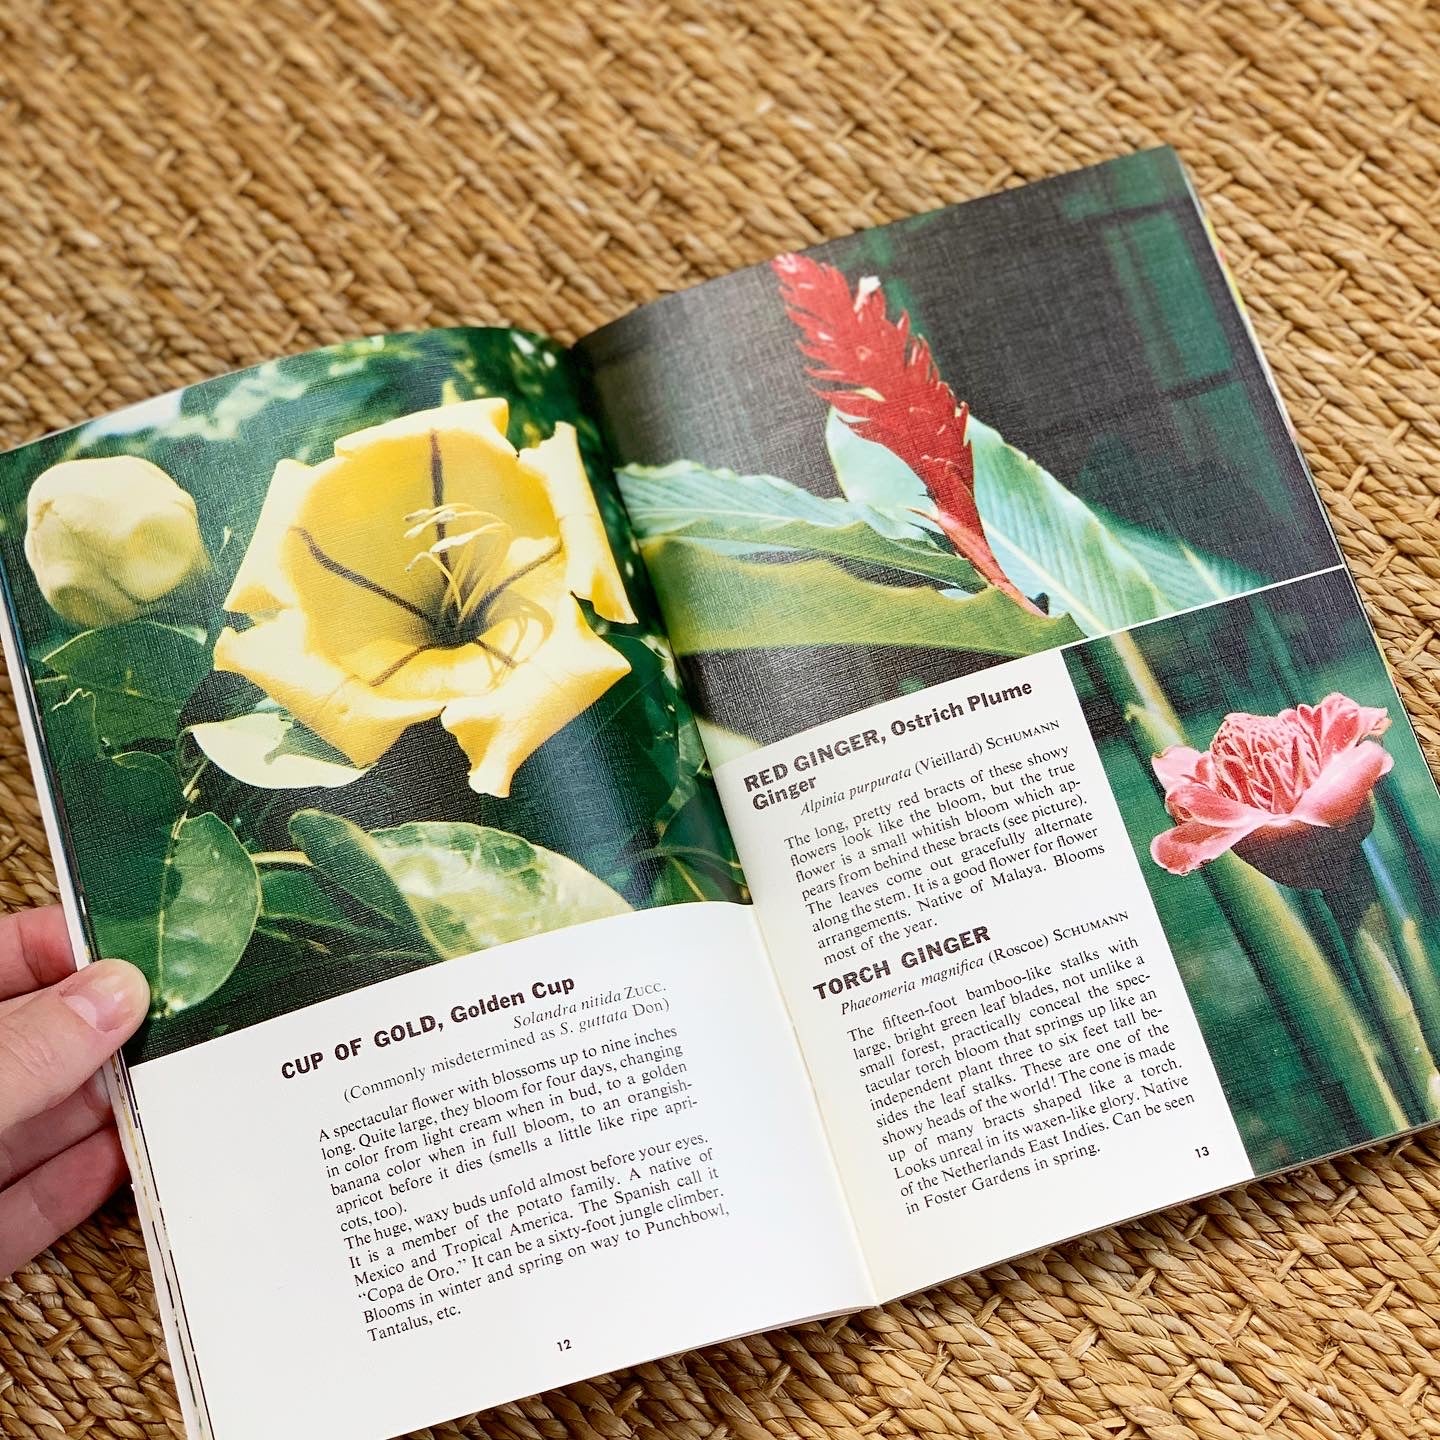 Hawaii Blossoms Book (1958)